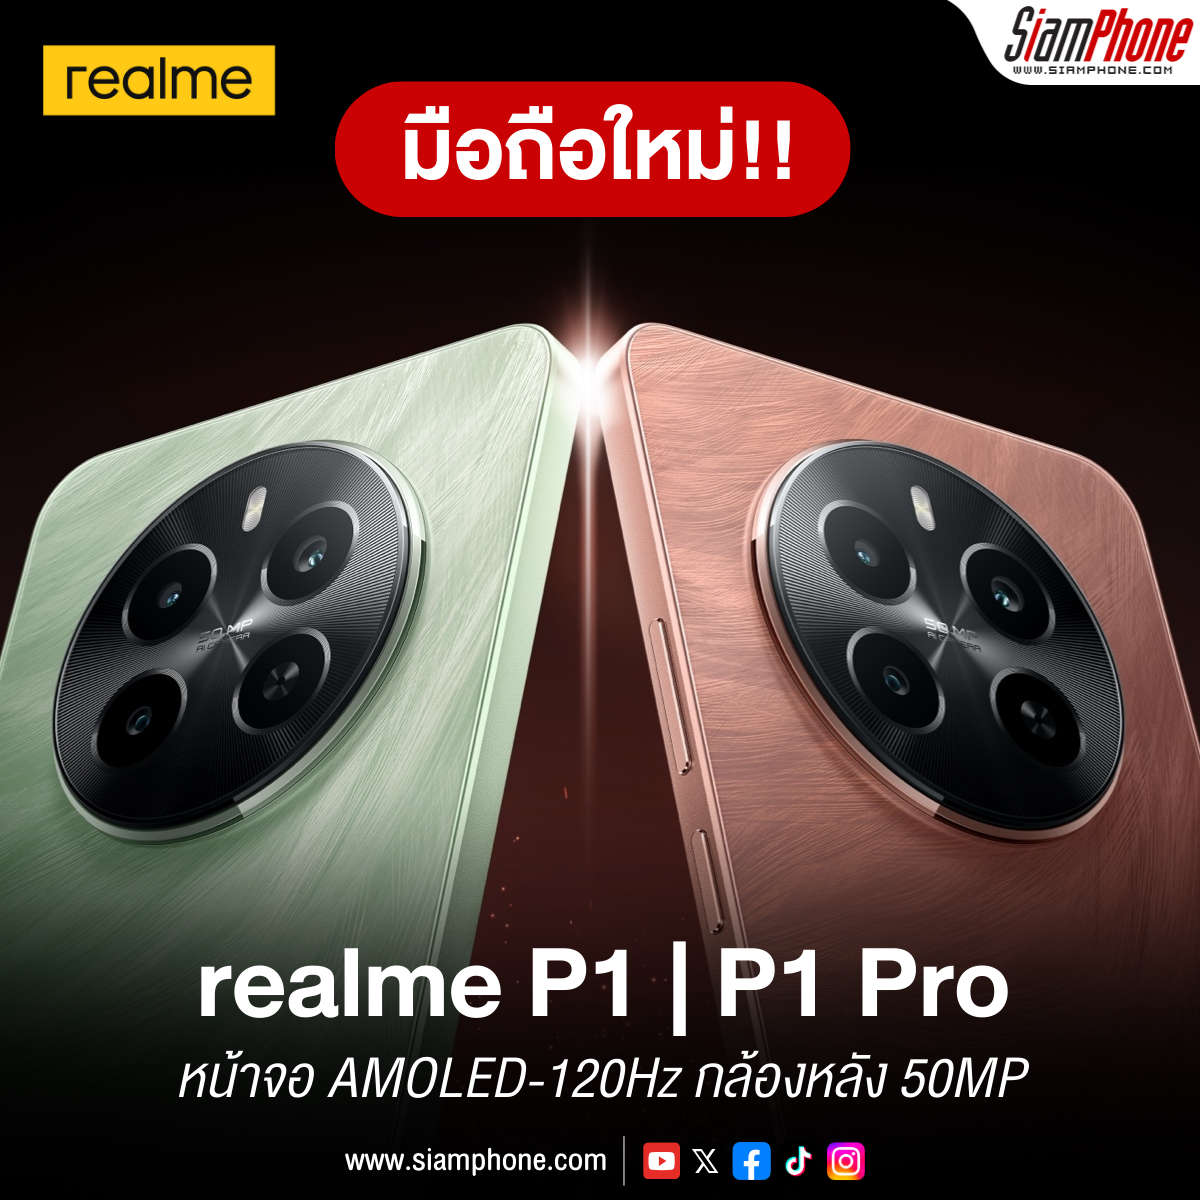 realme P1 และ realme P1 Pro หน้าจอ AMOLED-120Hz กล้องหลัง 50MP ชาร์จเร็ว 45W